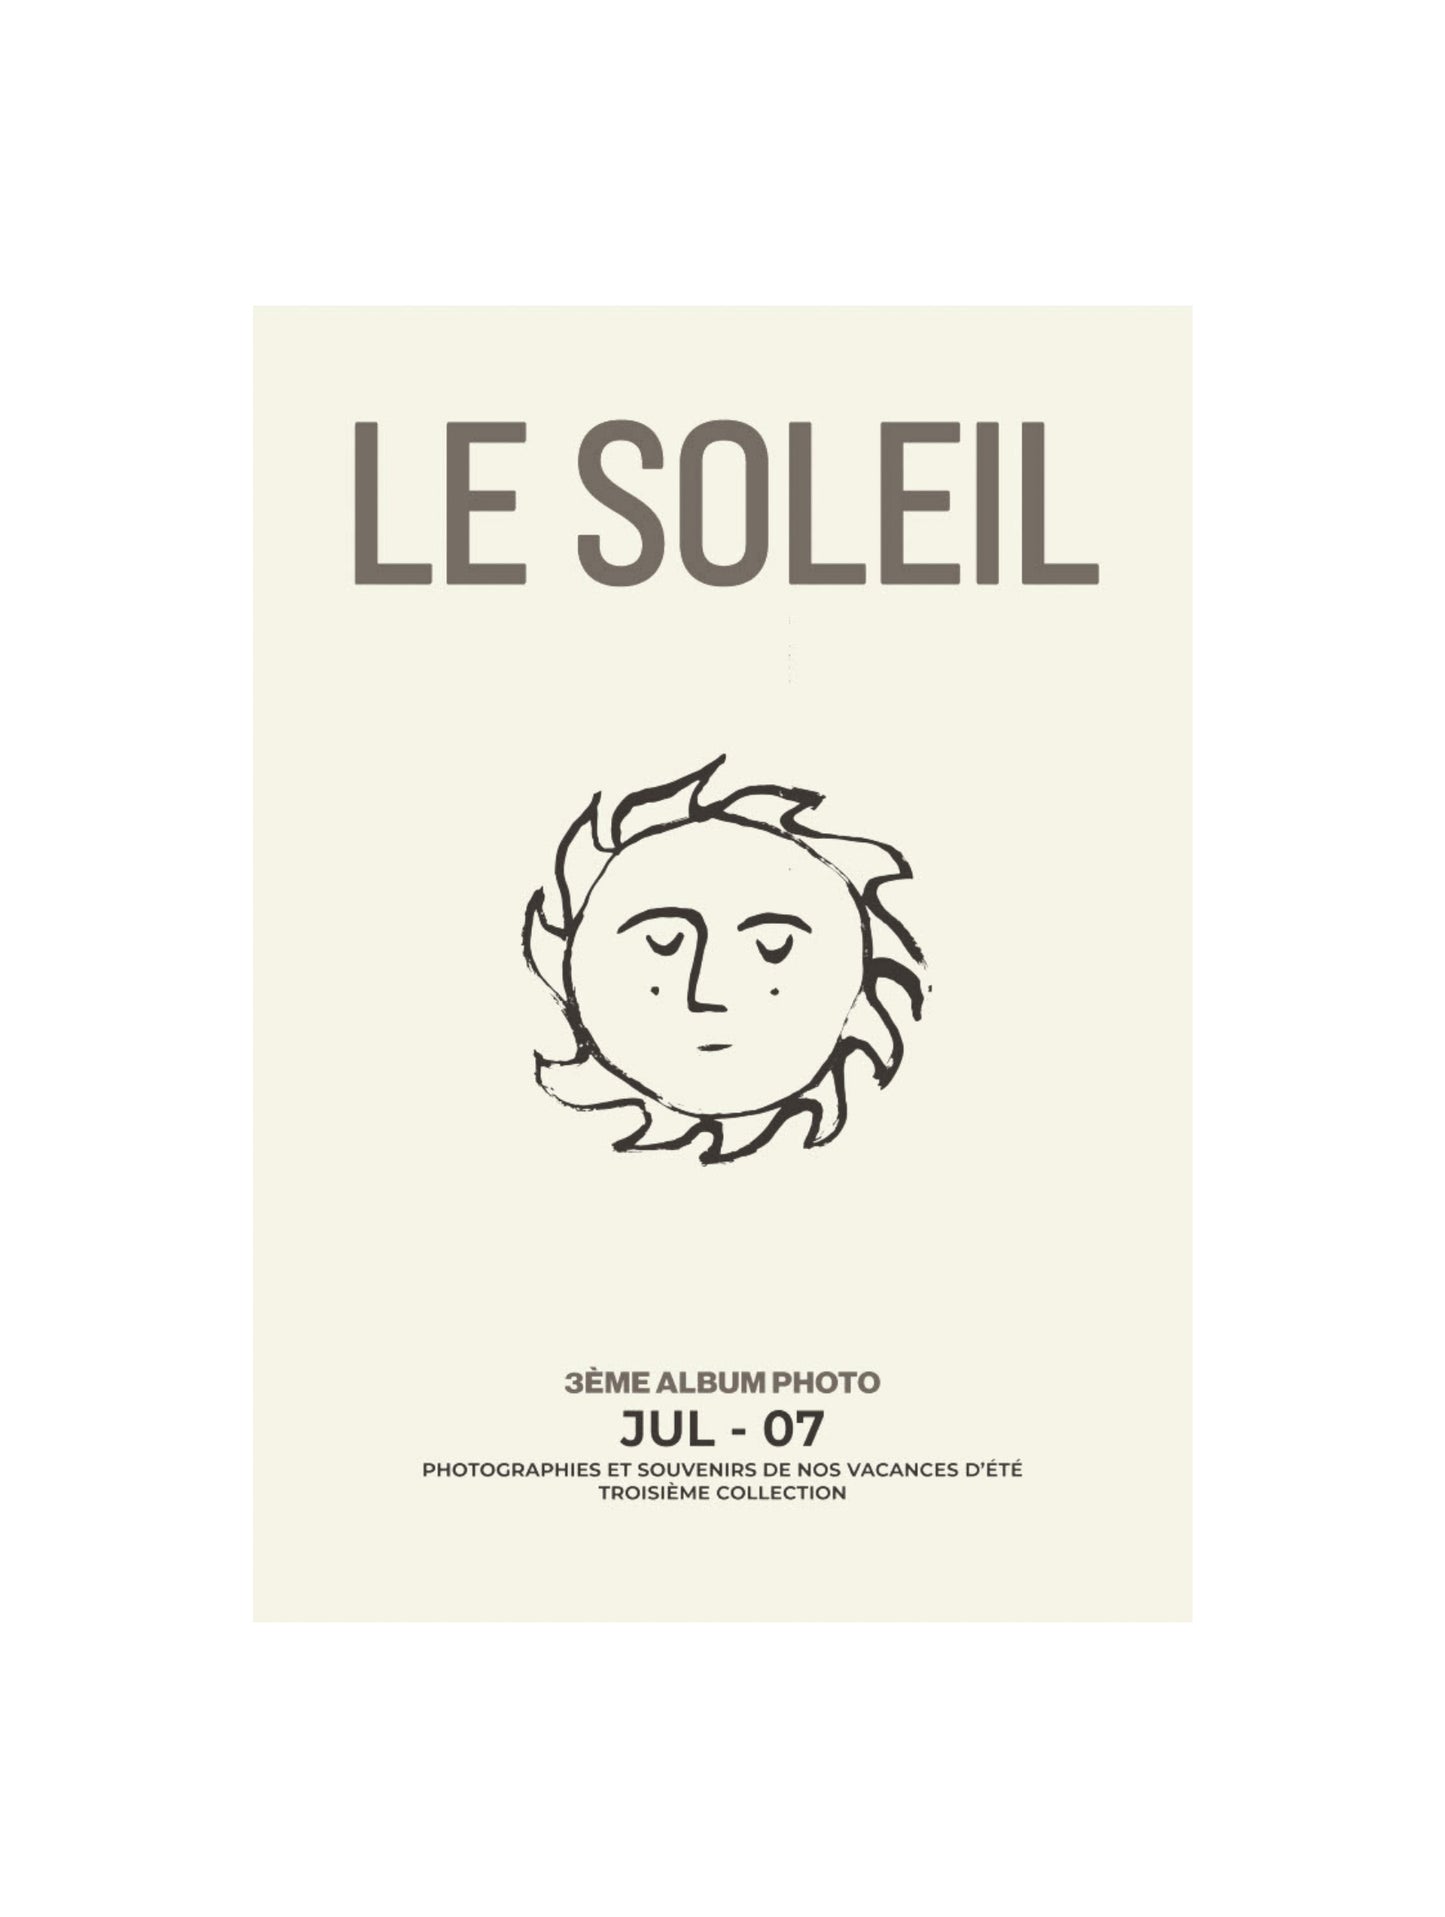 Poster Soleil